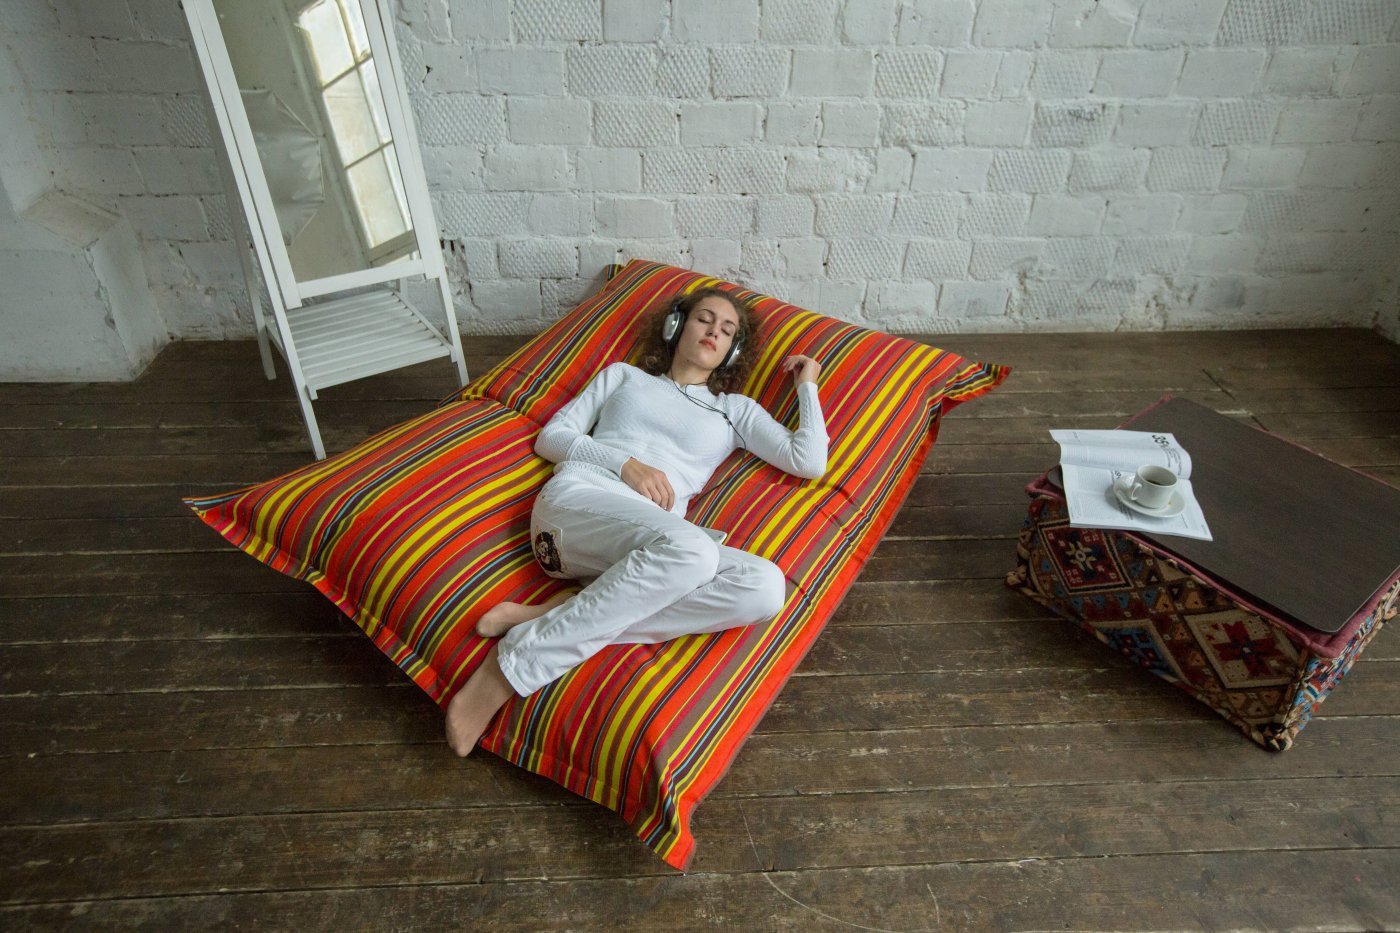 Подушка для кресла